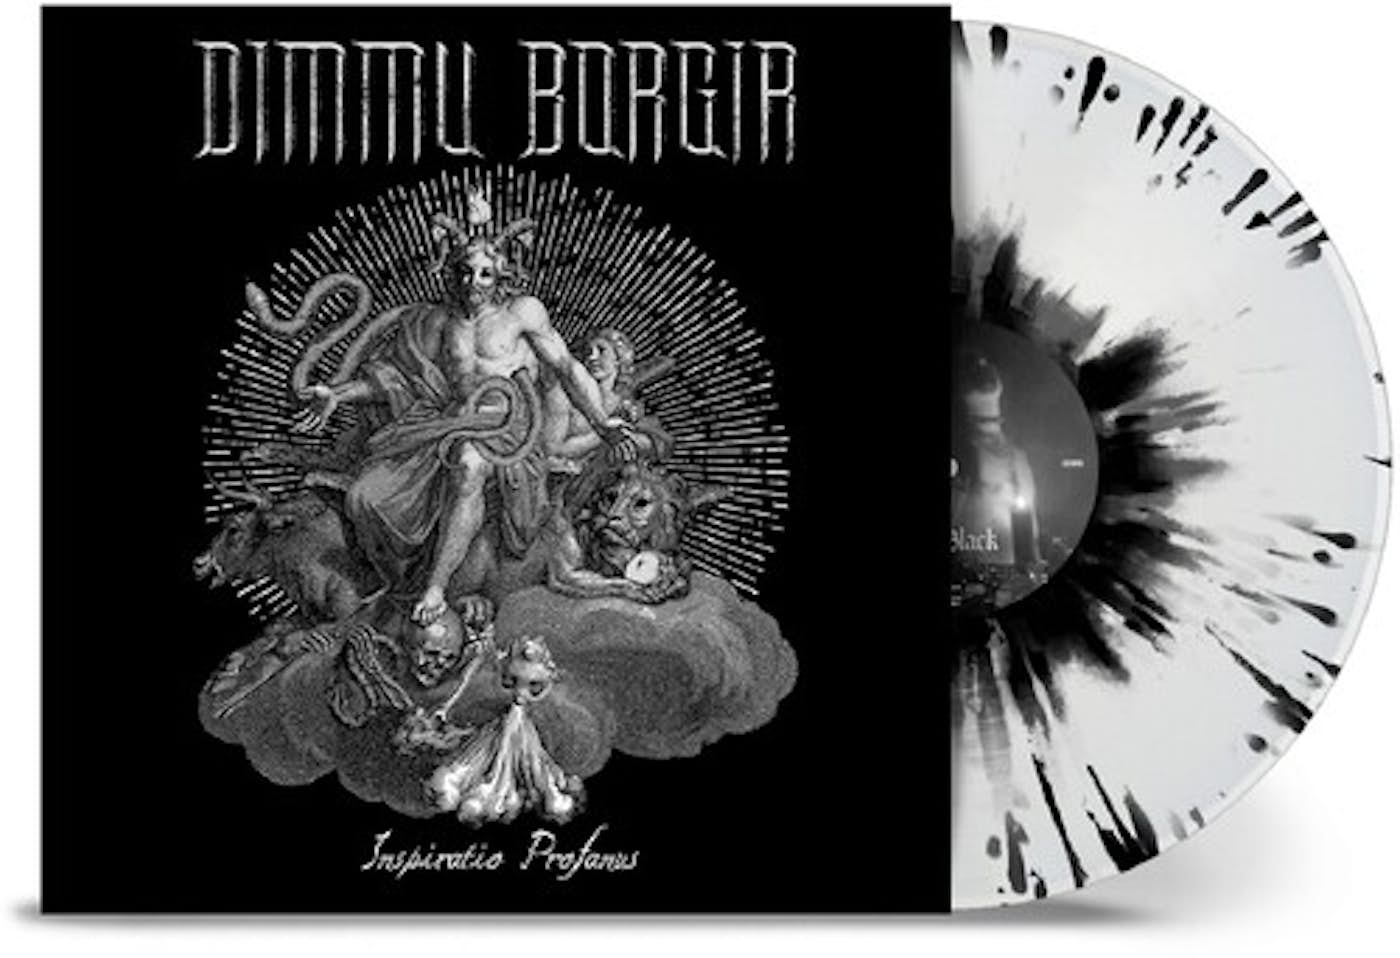 Dimmu borgiR  Black metal art, Extreme metal, Black metal